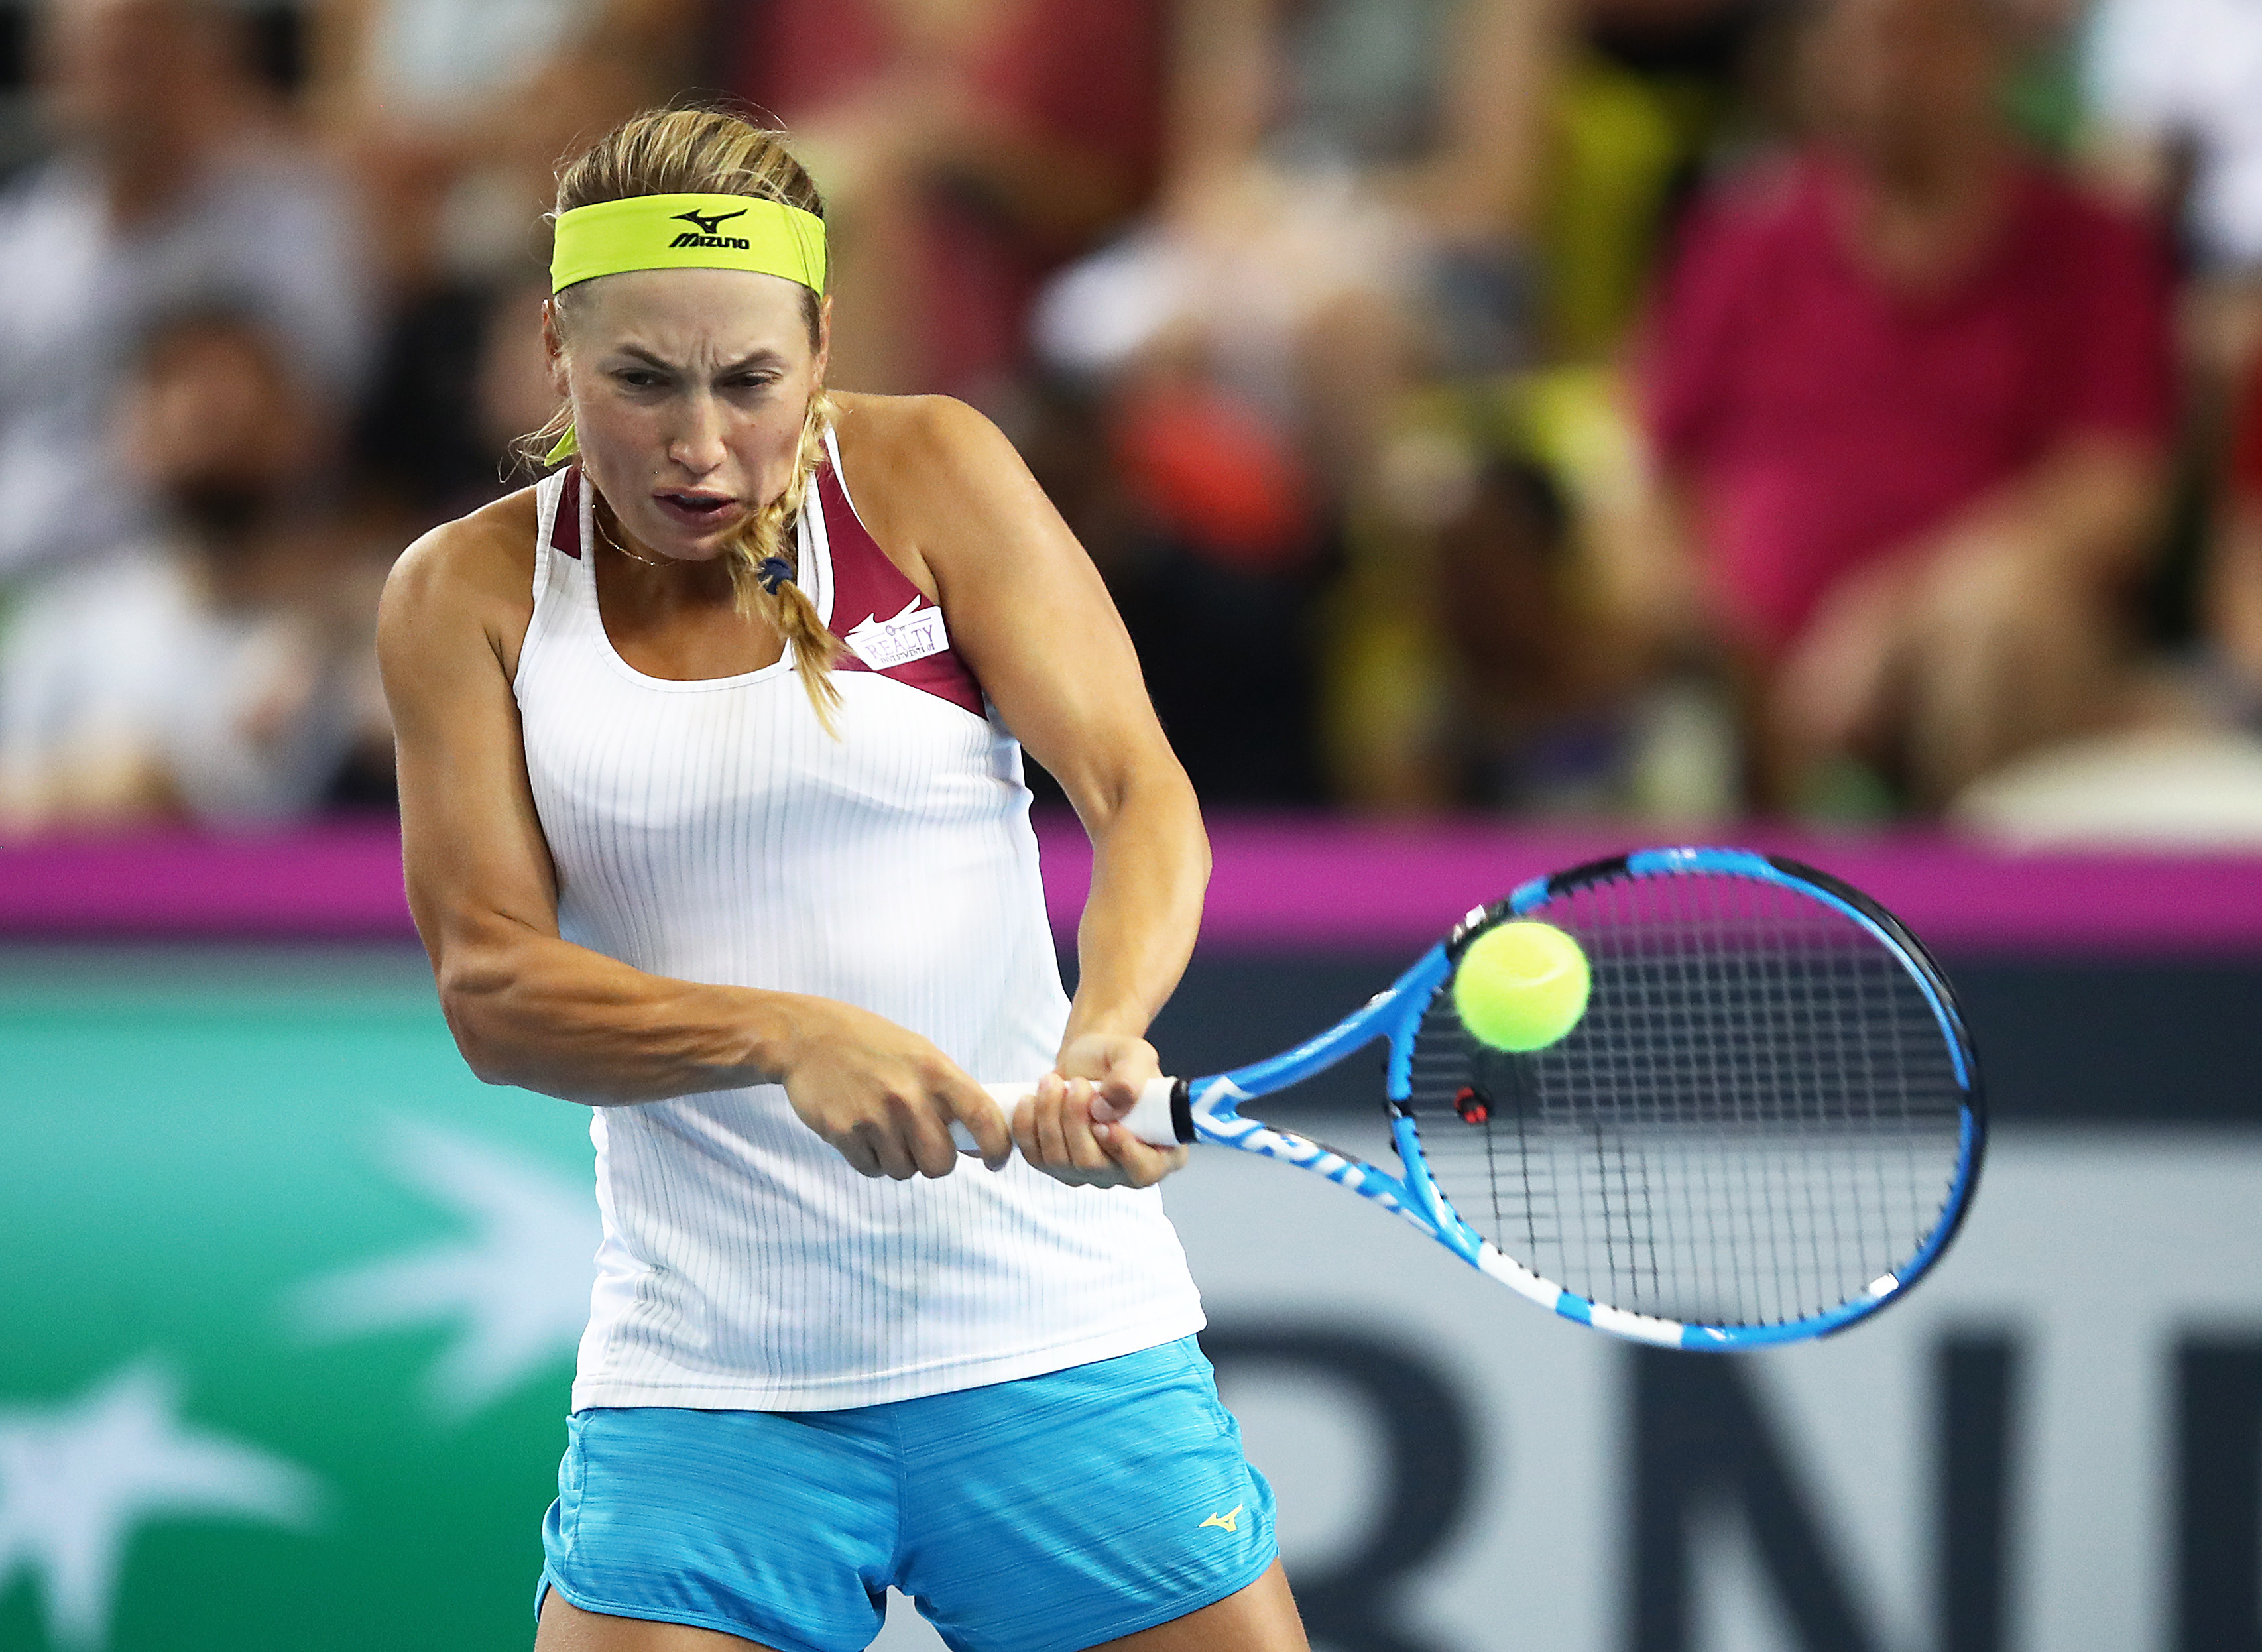 putintseva-wins-wta-s-longest-match-of-the-season-in-nuremberg-tennis